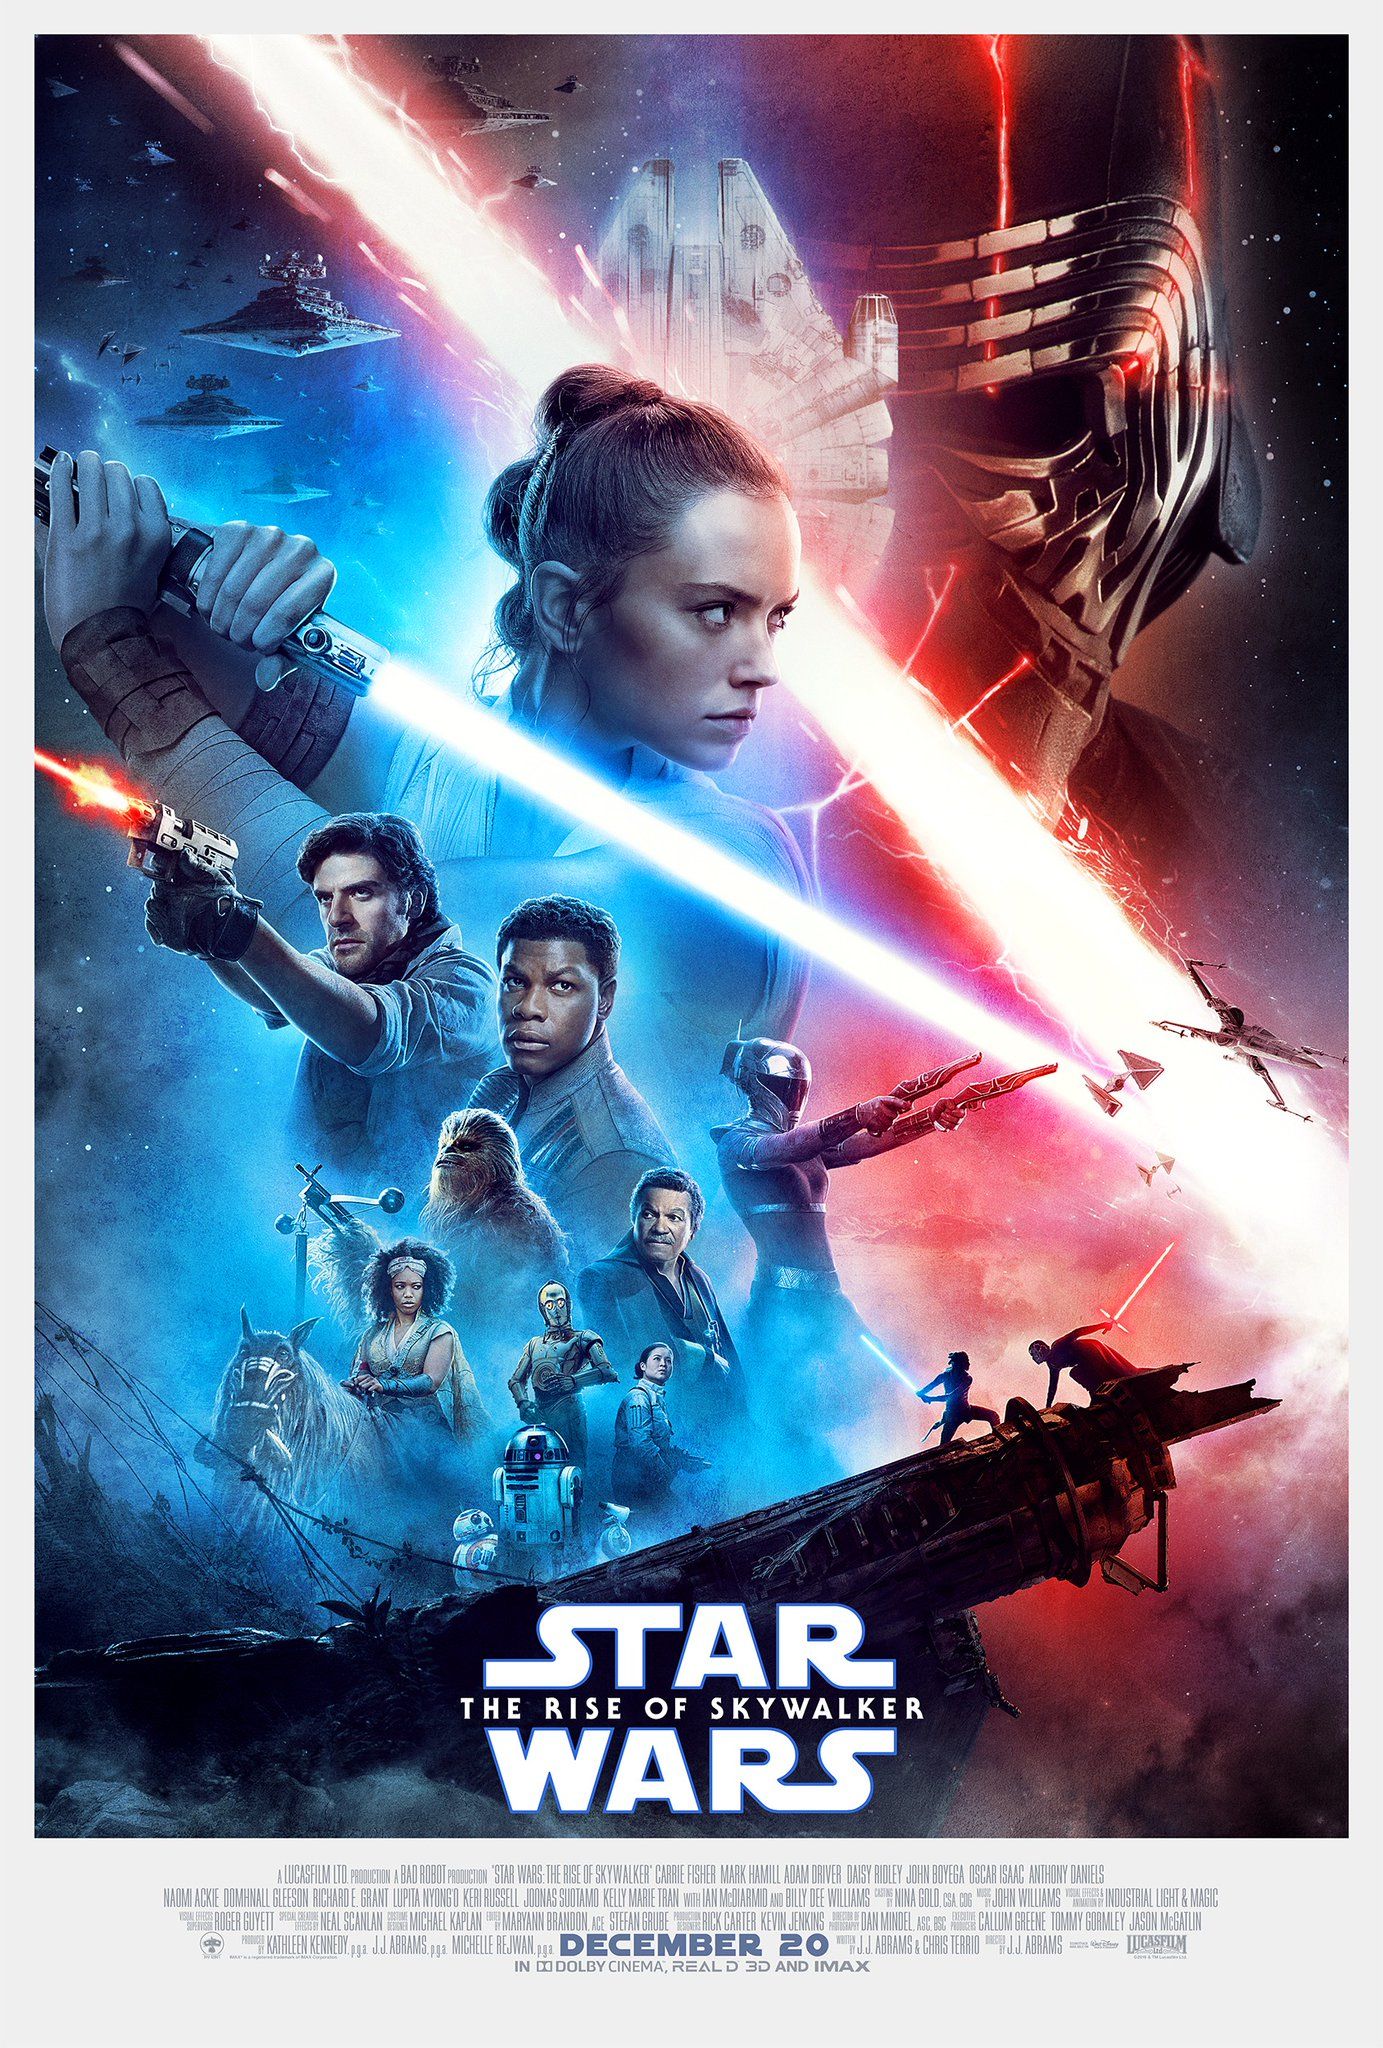 Star Wars Episode IX - The Rise of Skywalker Film Poster